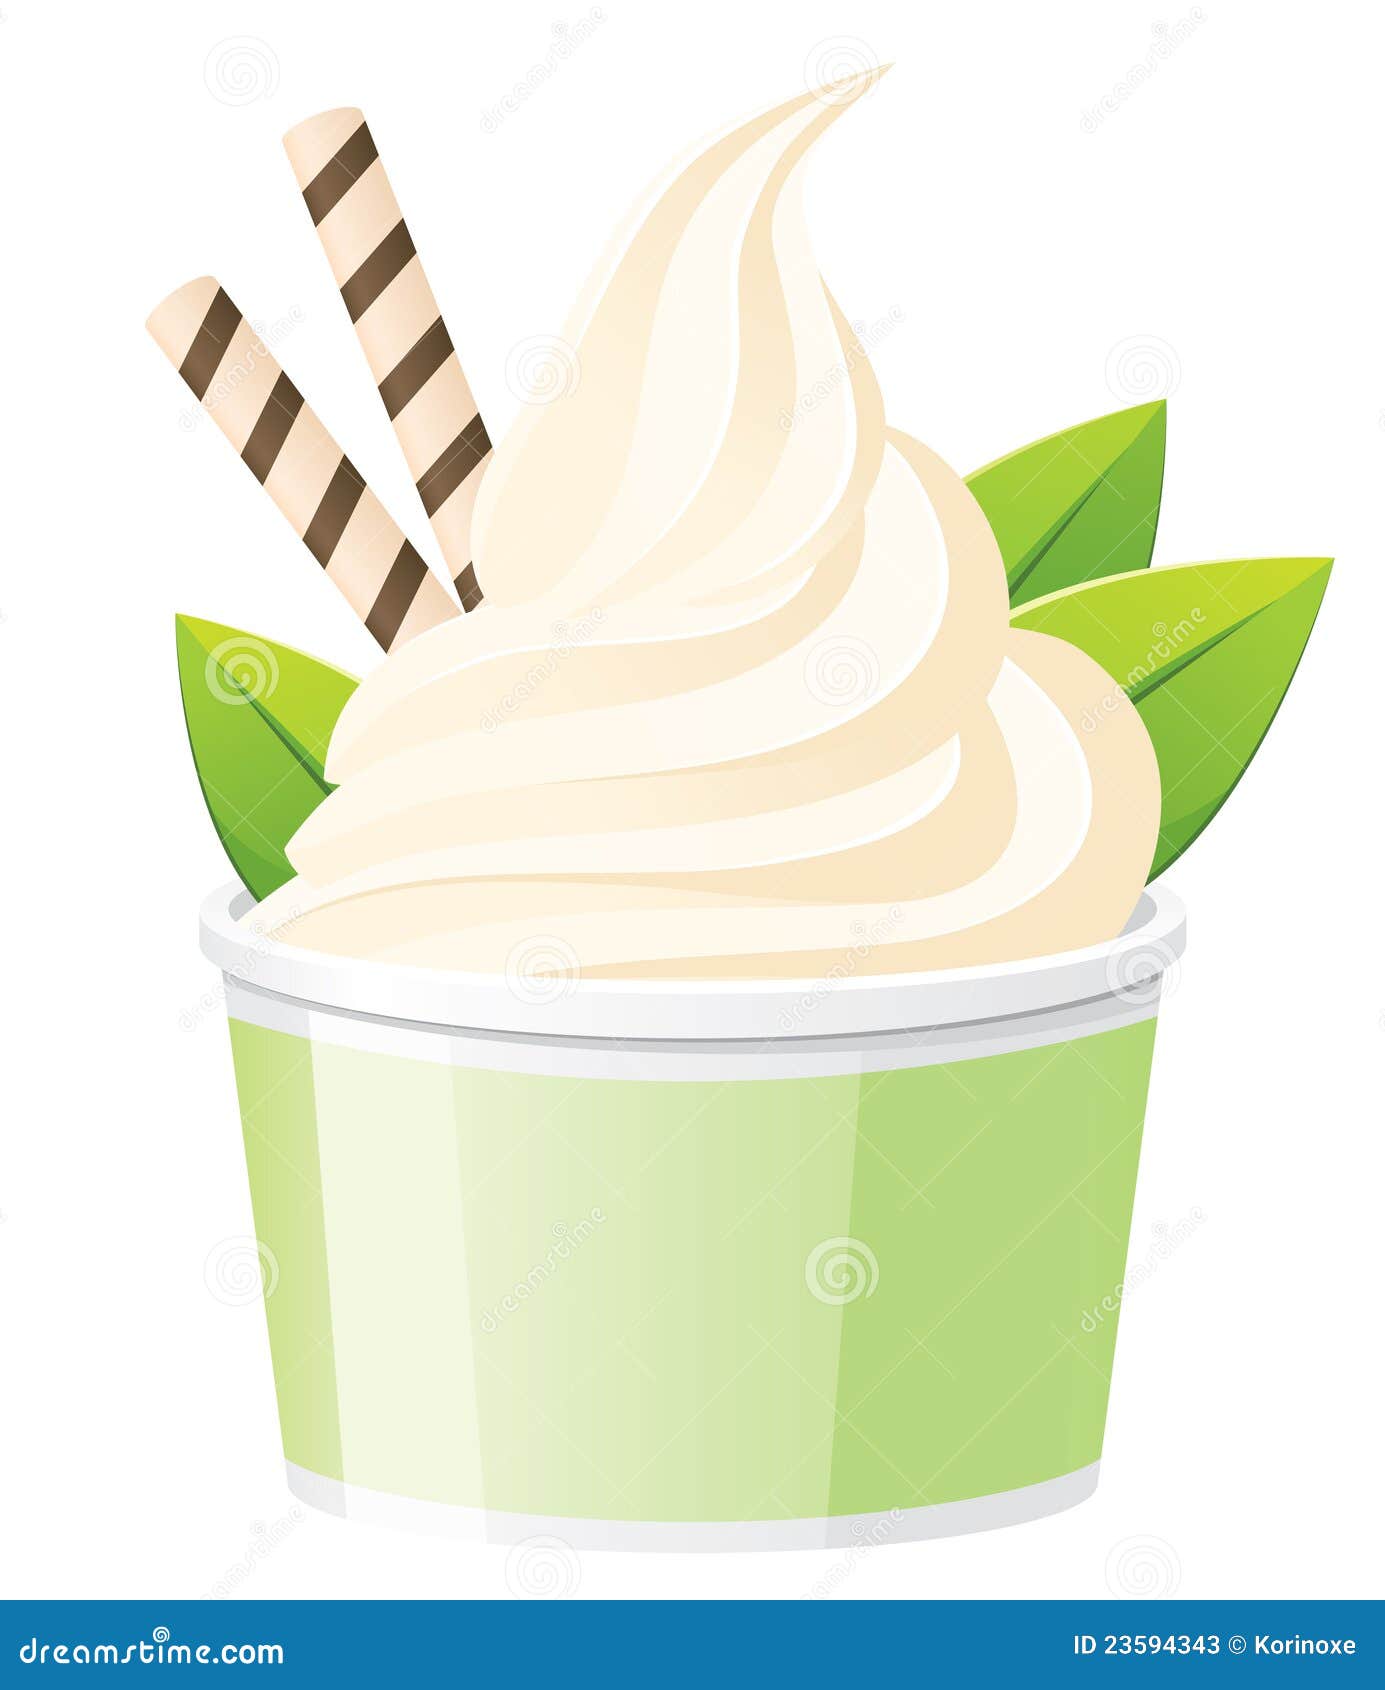 free clip art of yogurt - photo #23